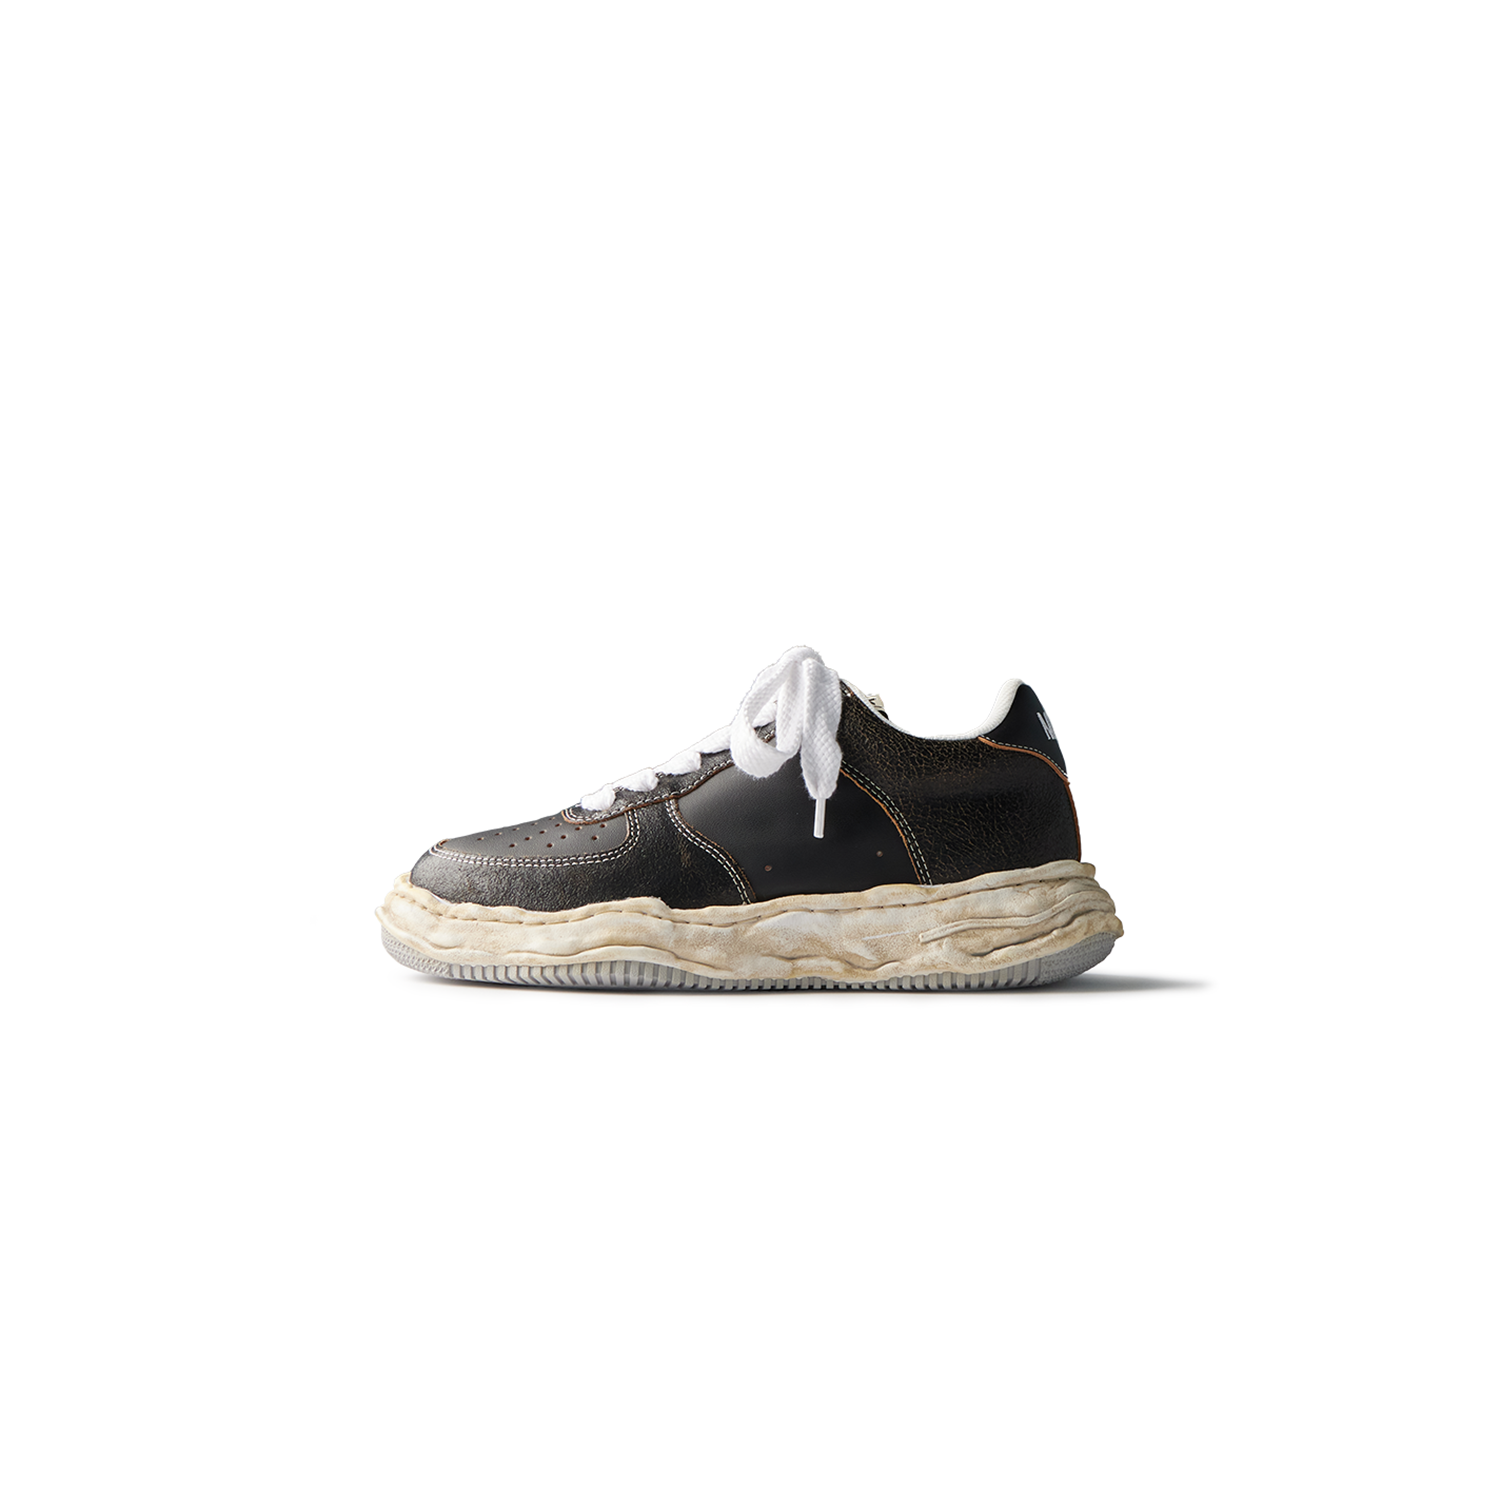 MAISON MIHARA YASUHIRO - Wayne Low Cracking Leather Sneaker product image